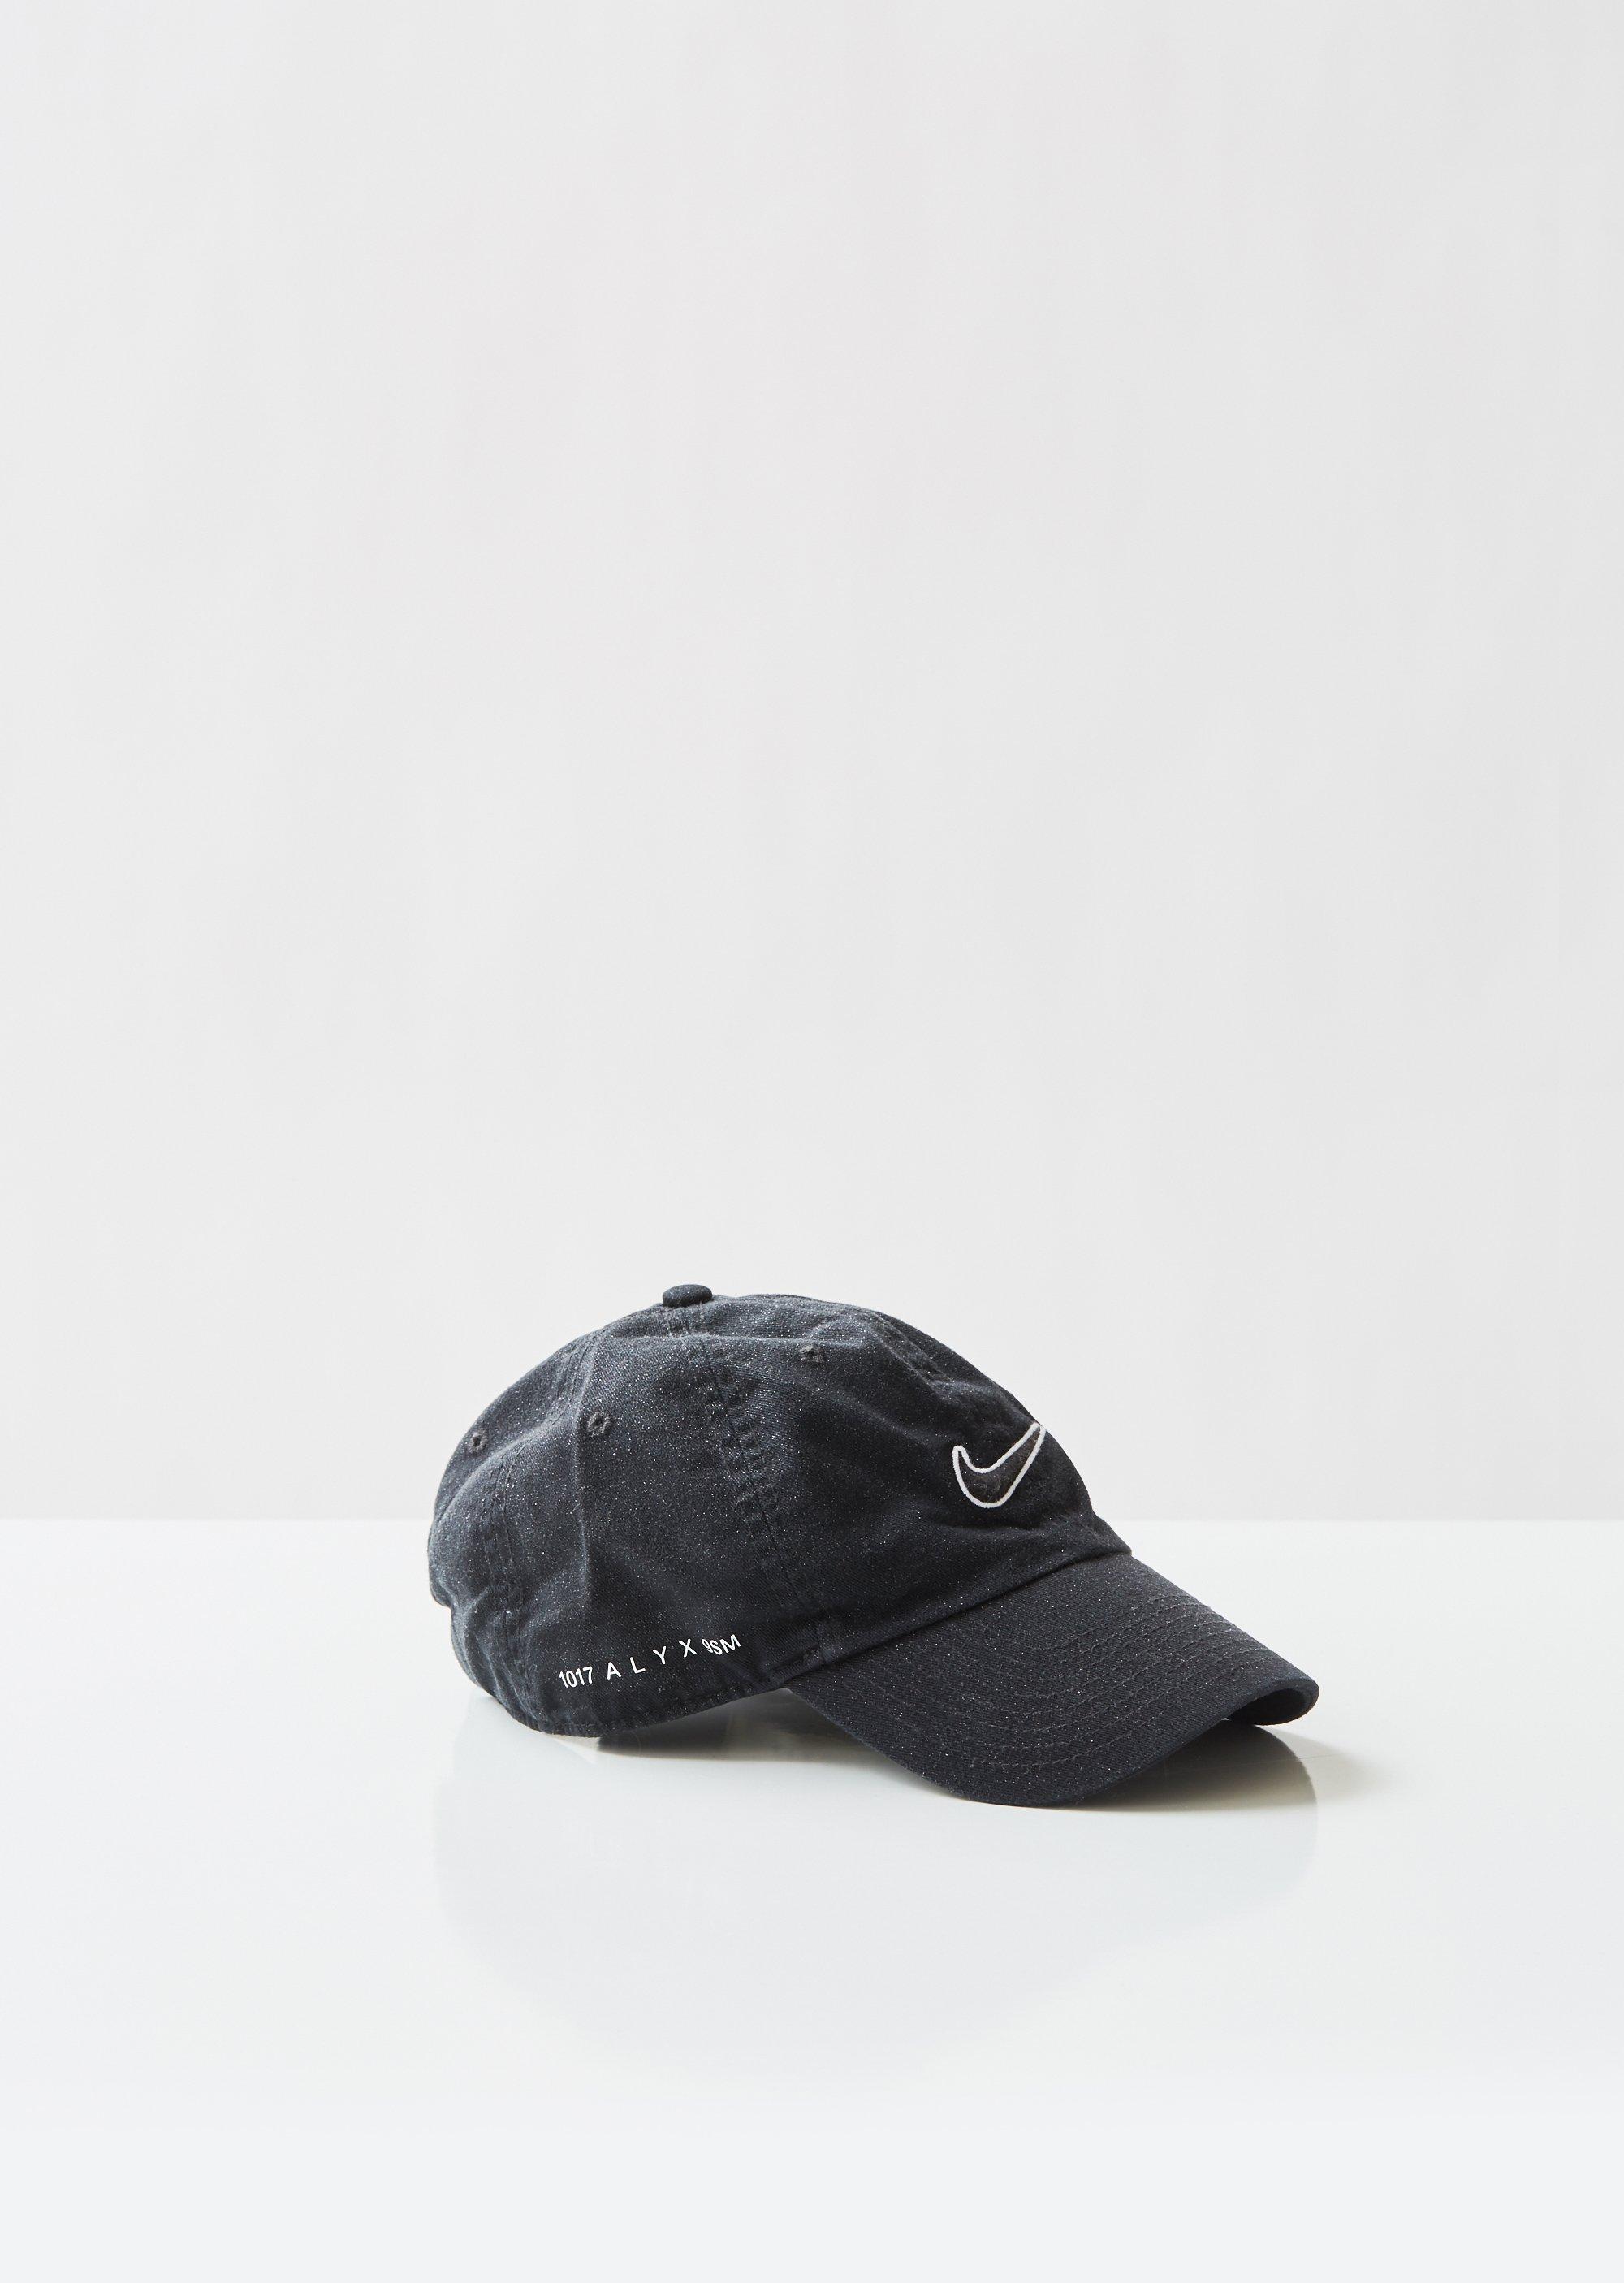 1017 ALYX 9SM Cotton X Nike Golf Cap in Black for Men - Lyst